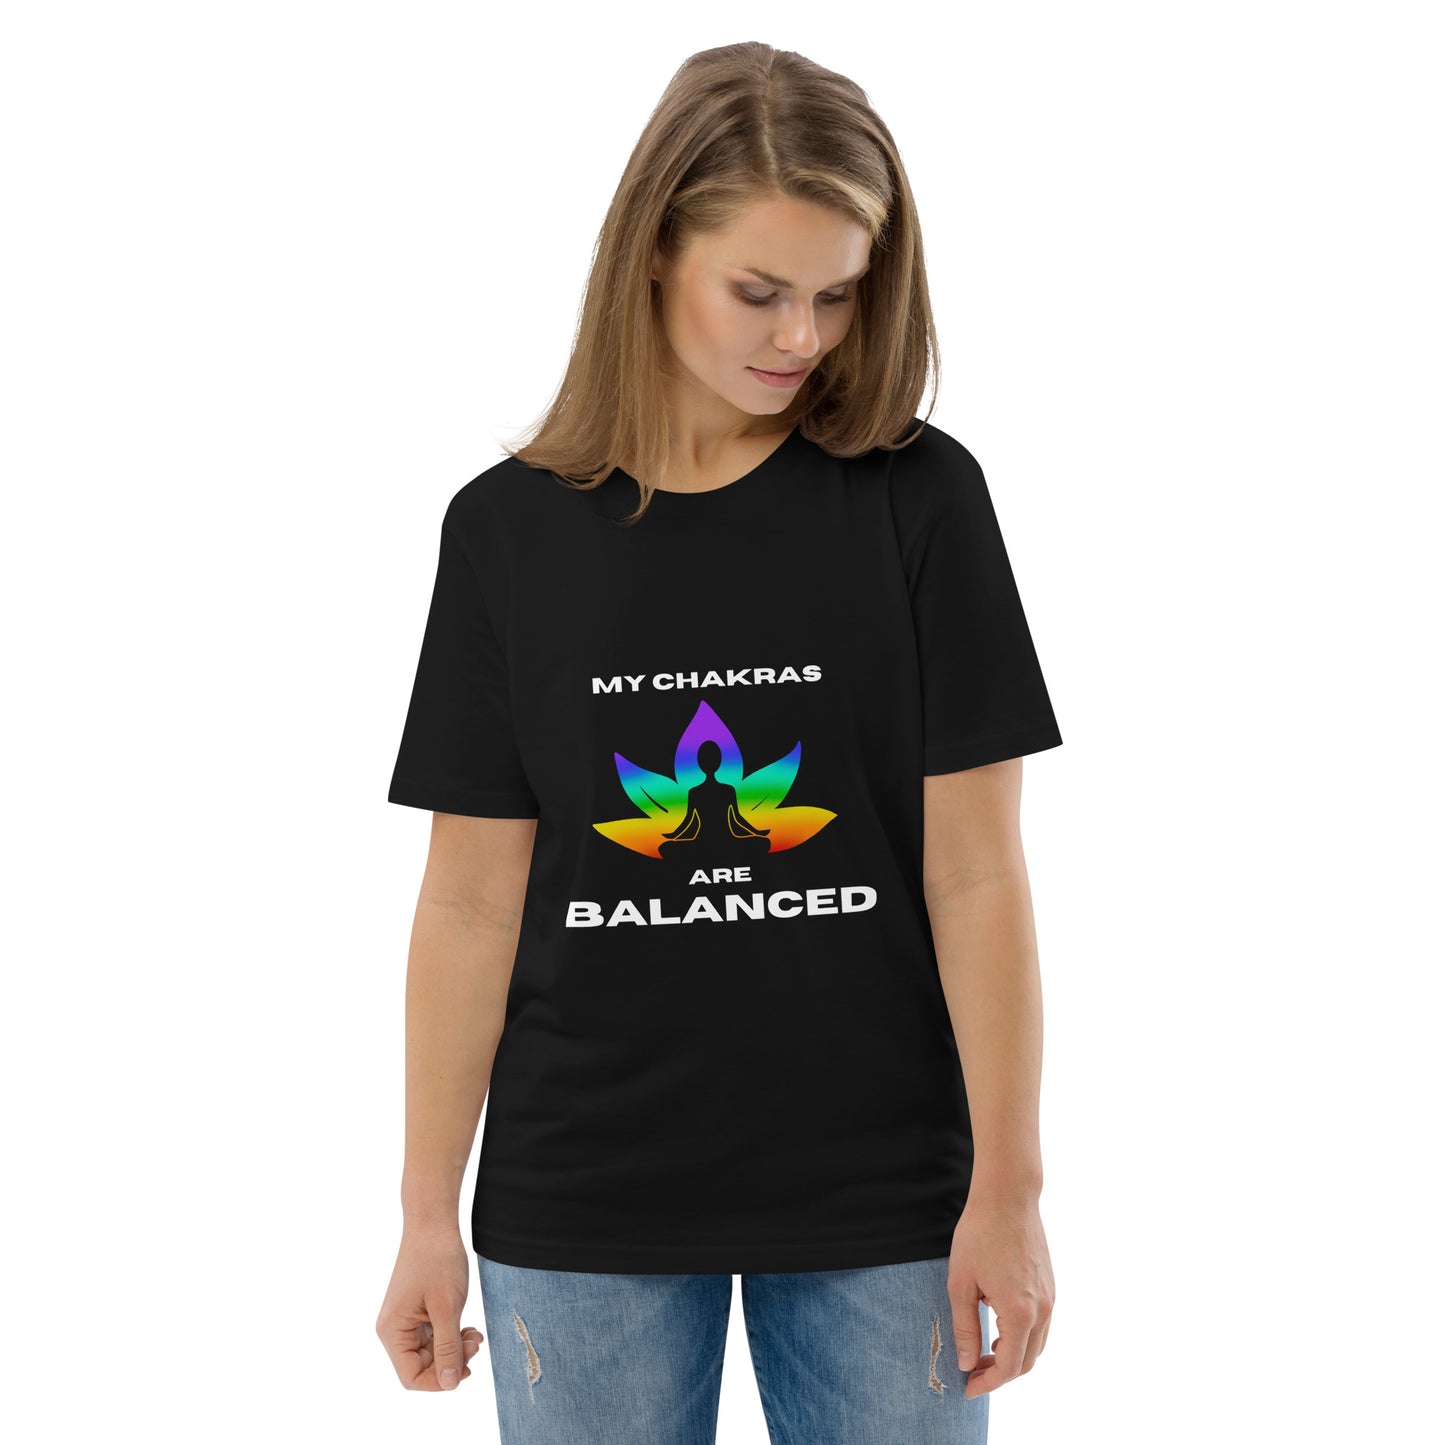 My chakras are balanced, t-shirt